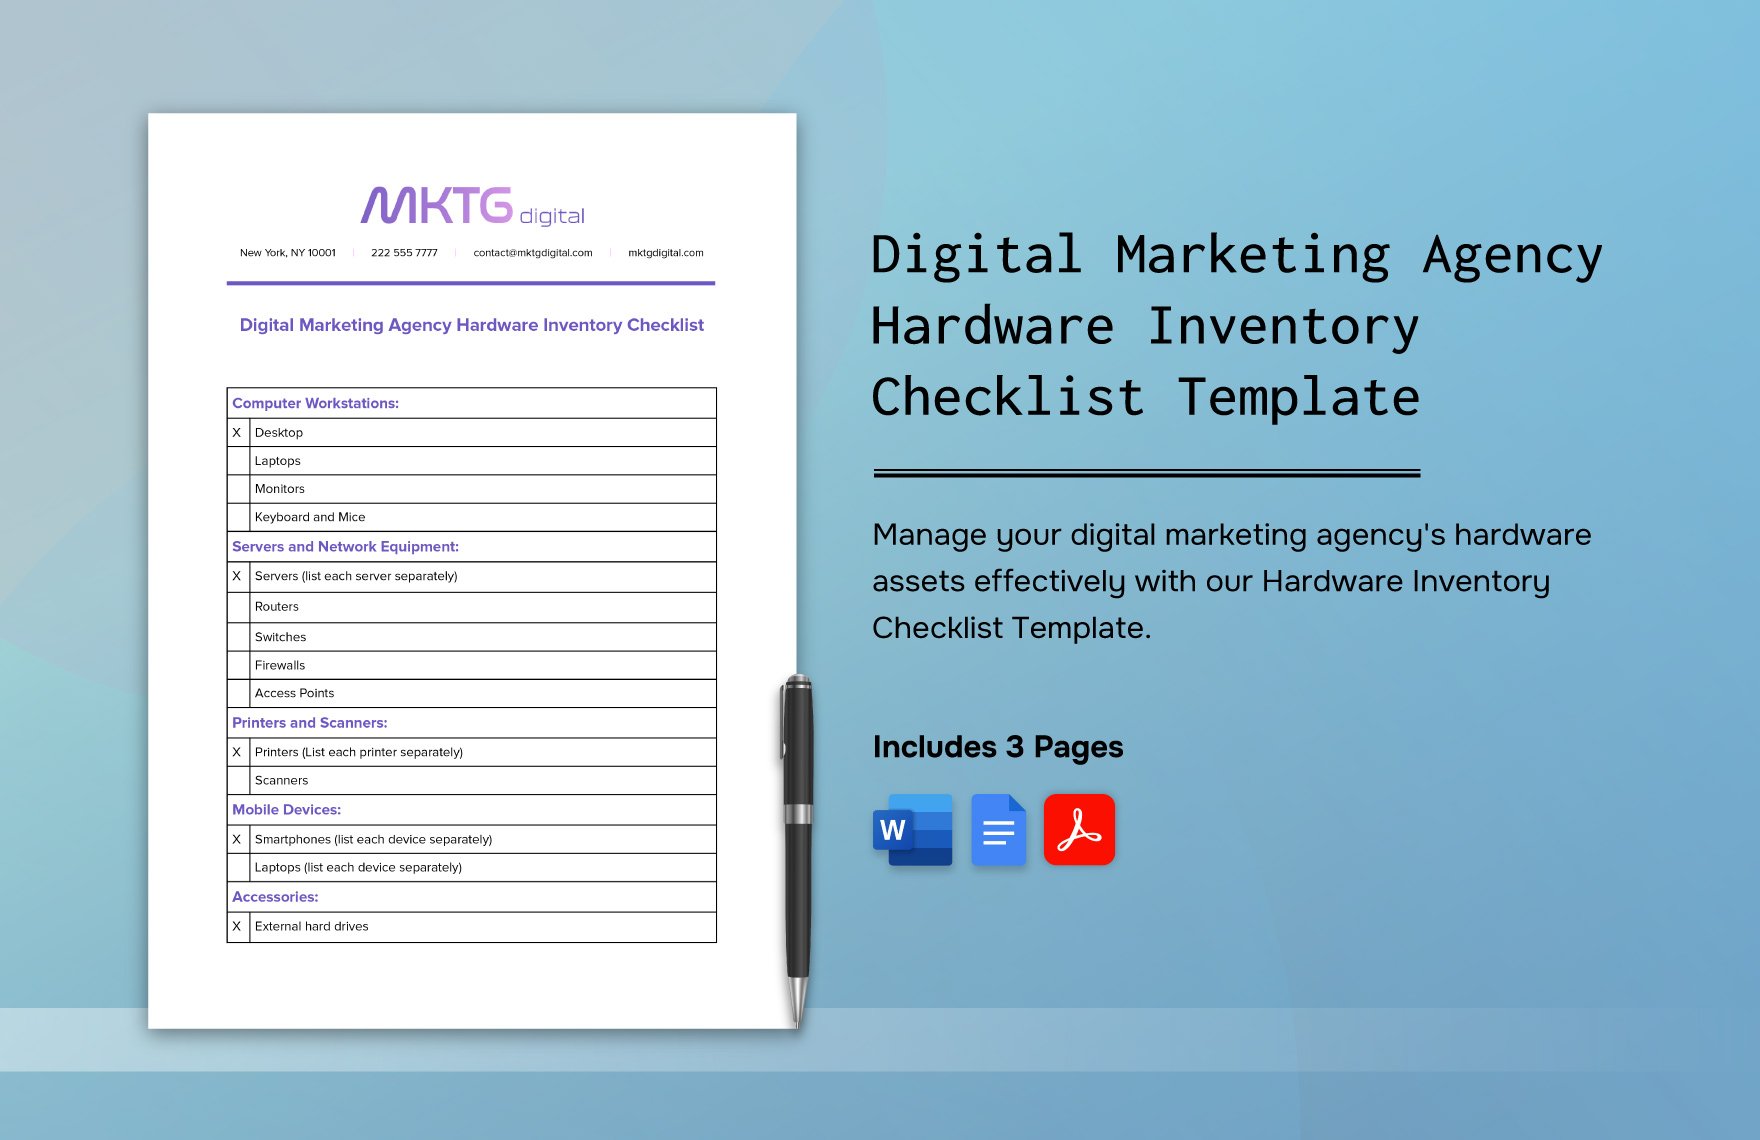 Digital Marketing Agency Hardware Inventory Checklist Template